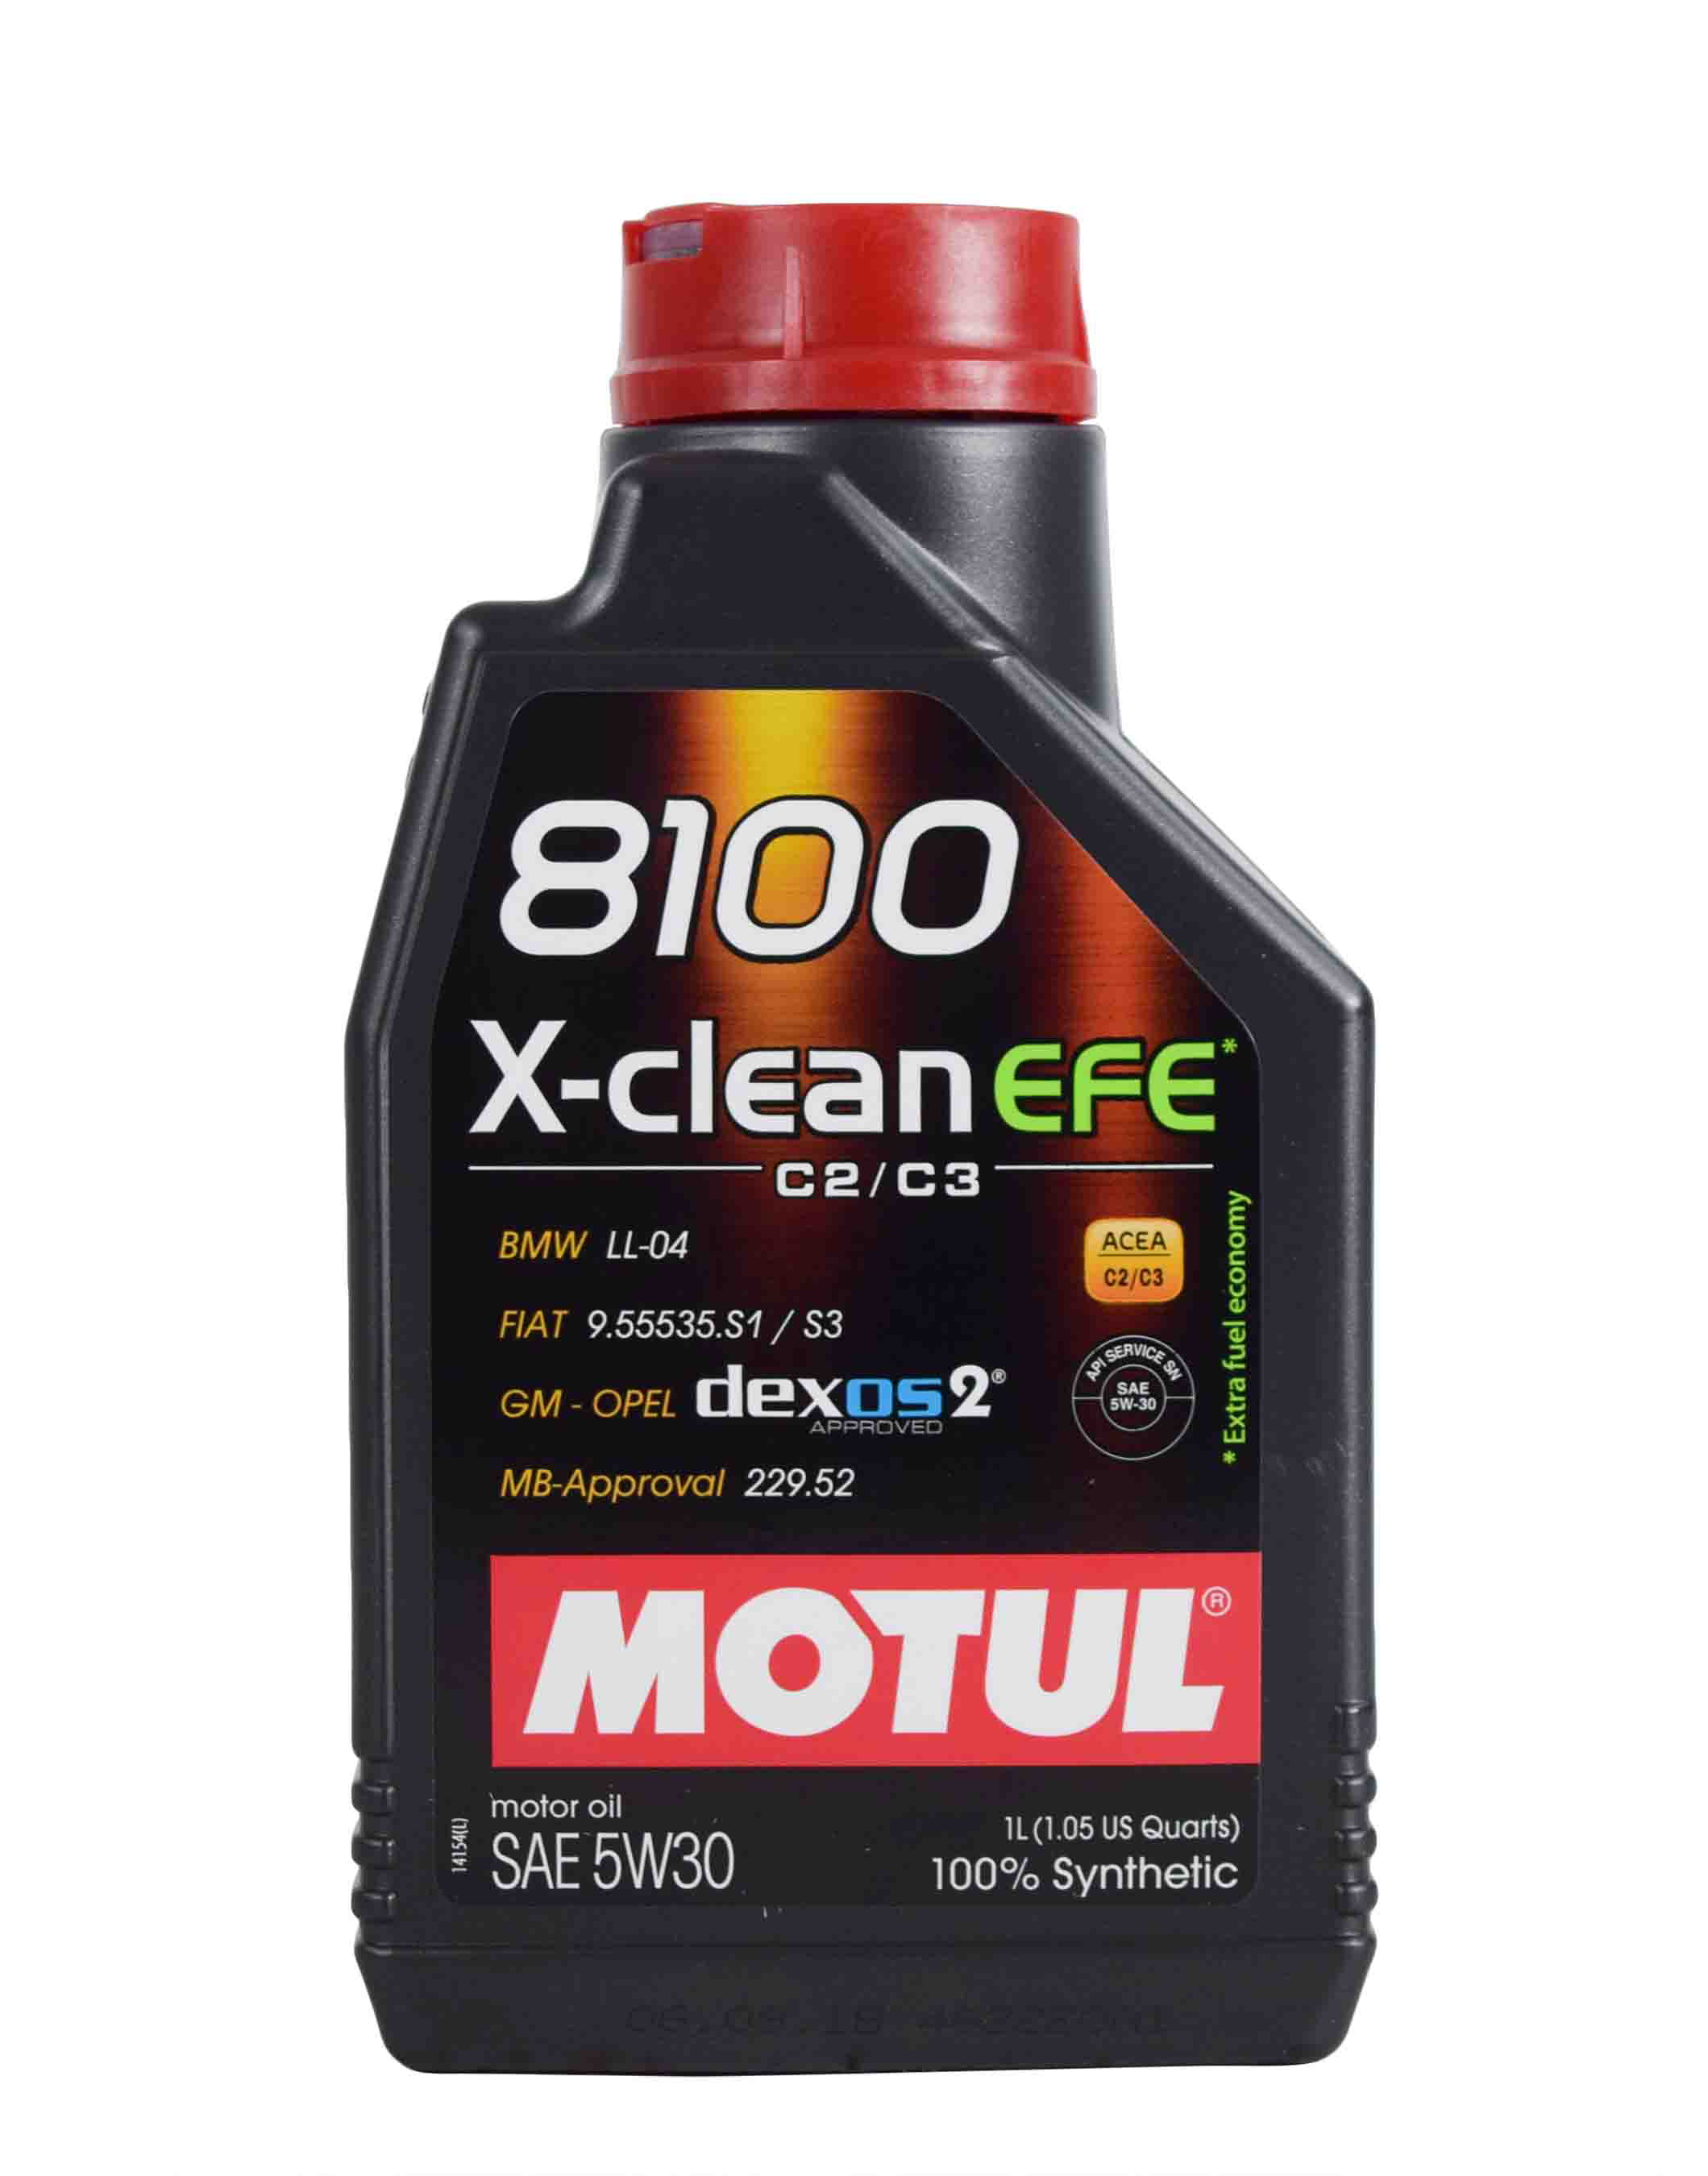 Motul 8100 X-Clean EFE 100% Synthetic SAE 5W30 Motor Oil 5W-30 1 Liter .